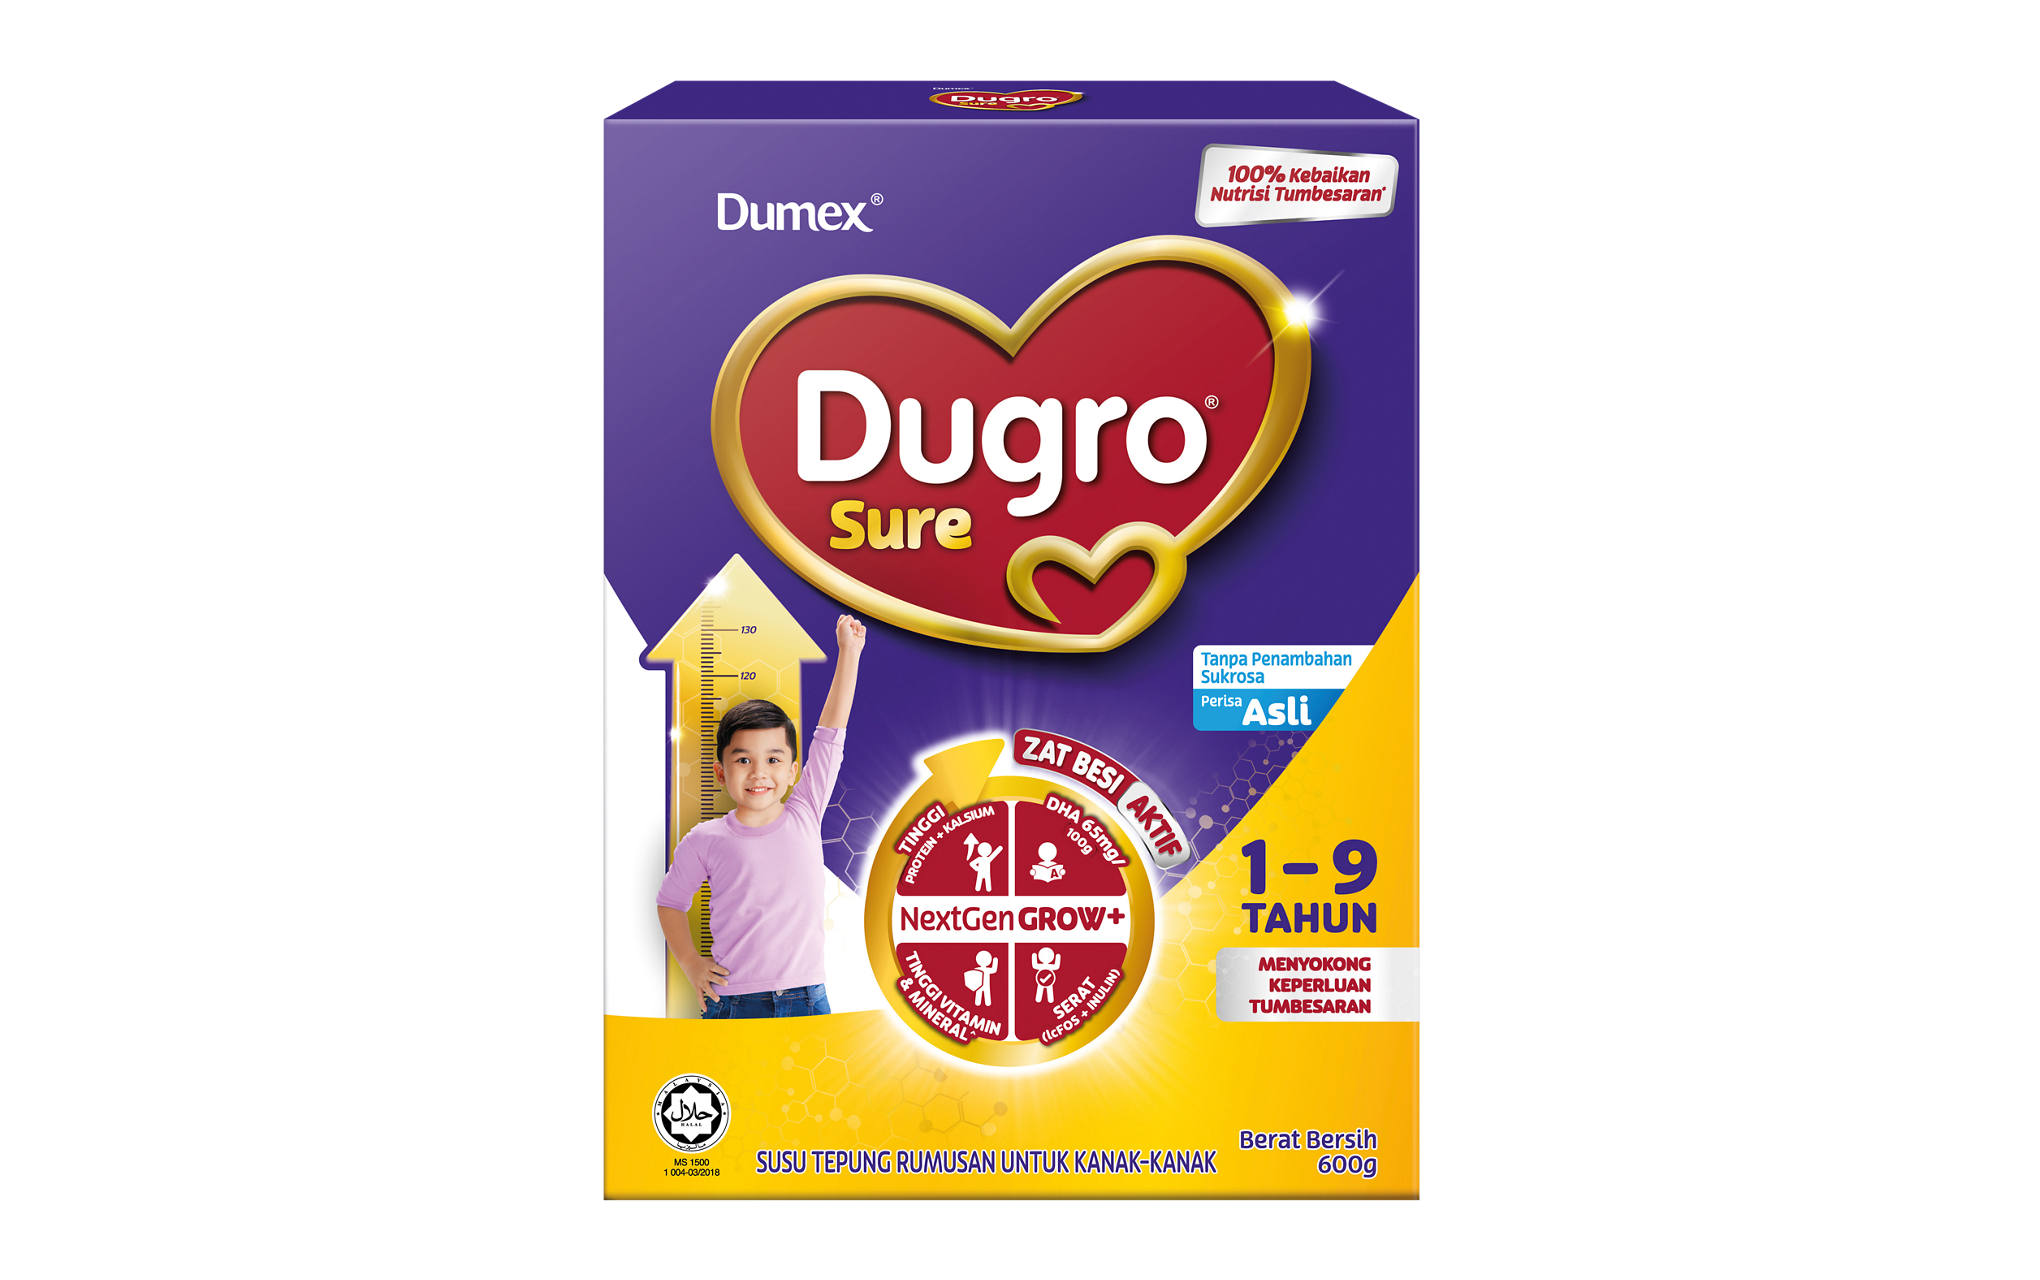 Dugro® Sure